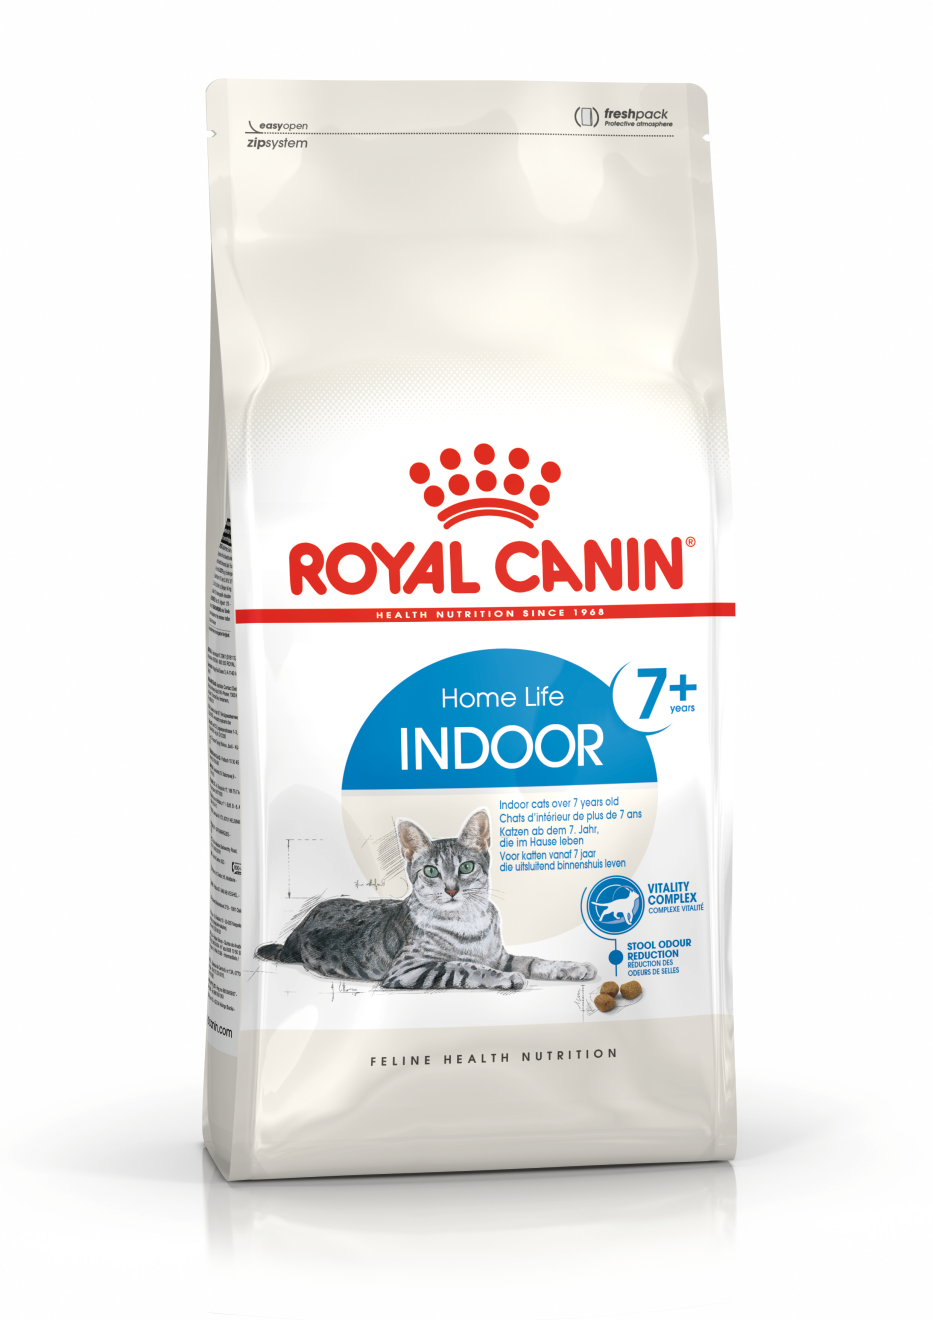 royal canin indoor long hair dry cat food